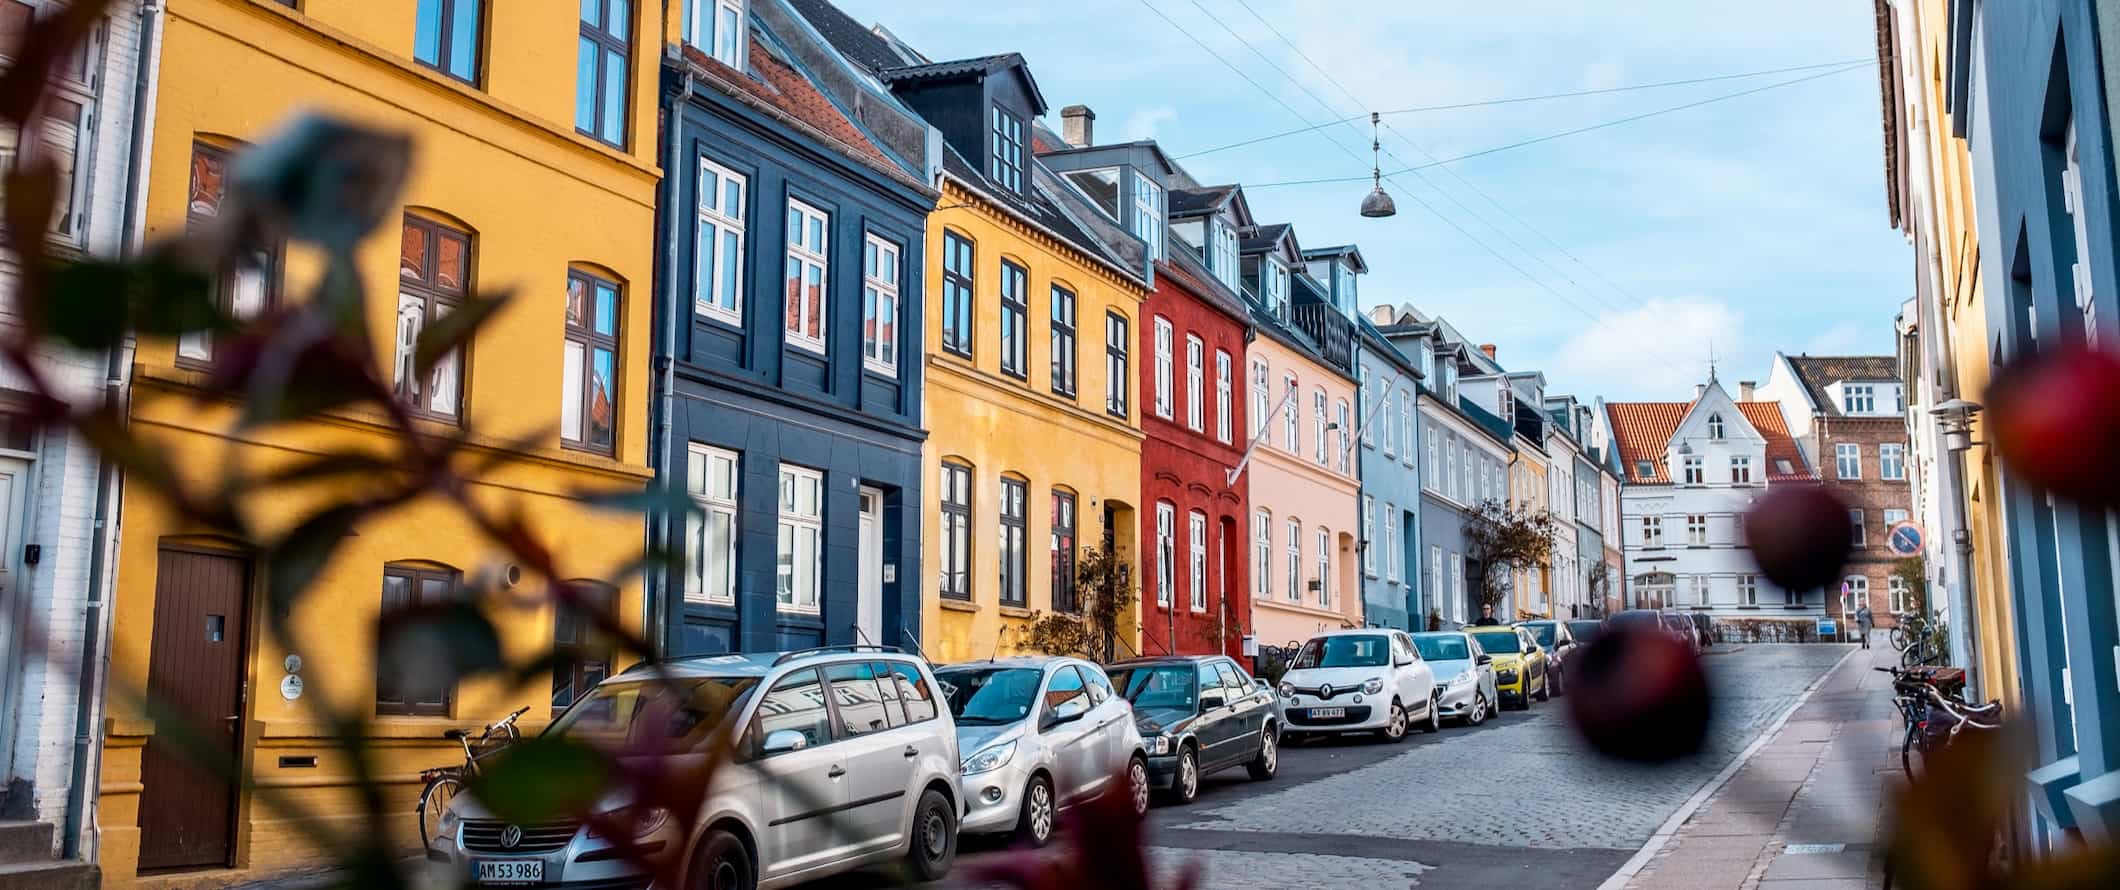 Casas coloridas numa rua tranquila em Aarhus, Dinamarca